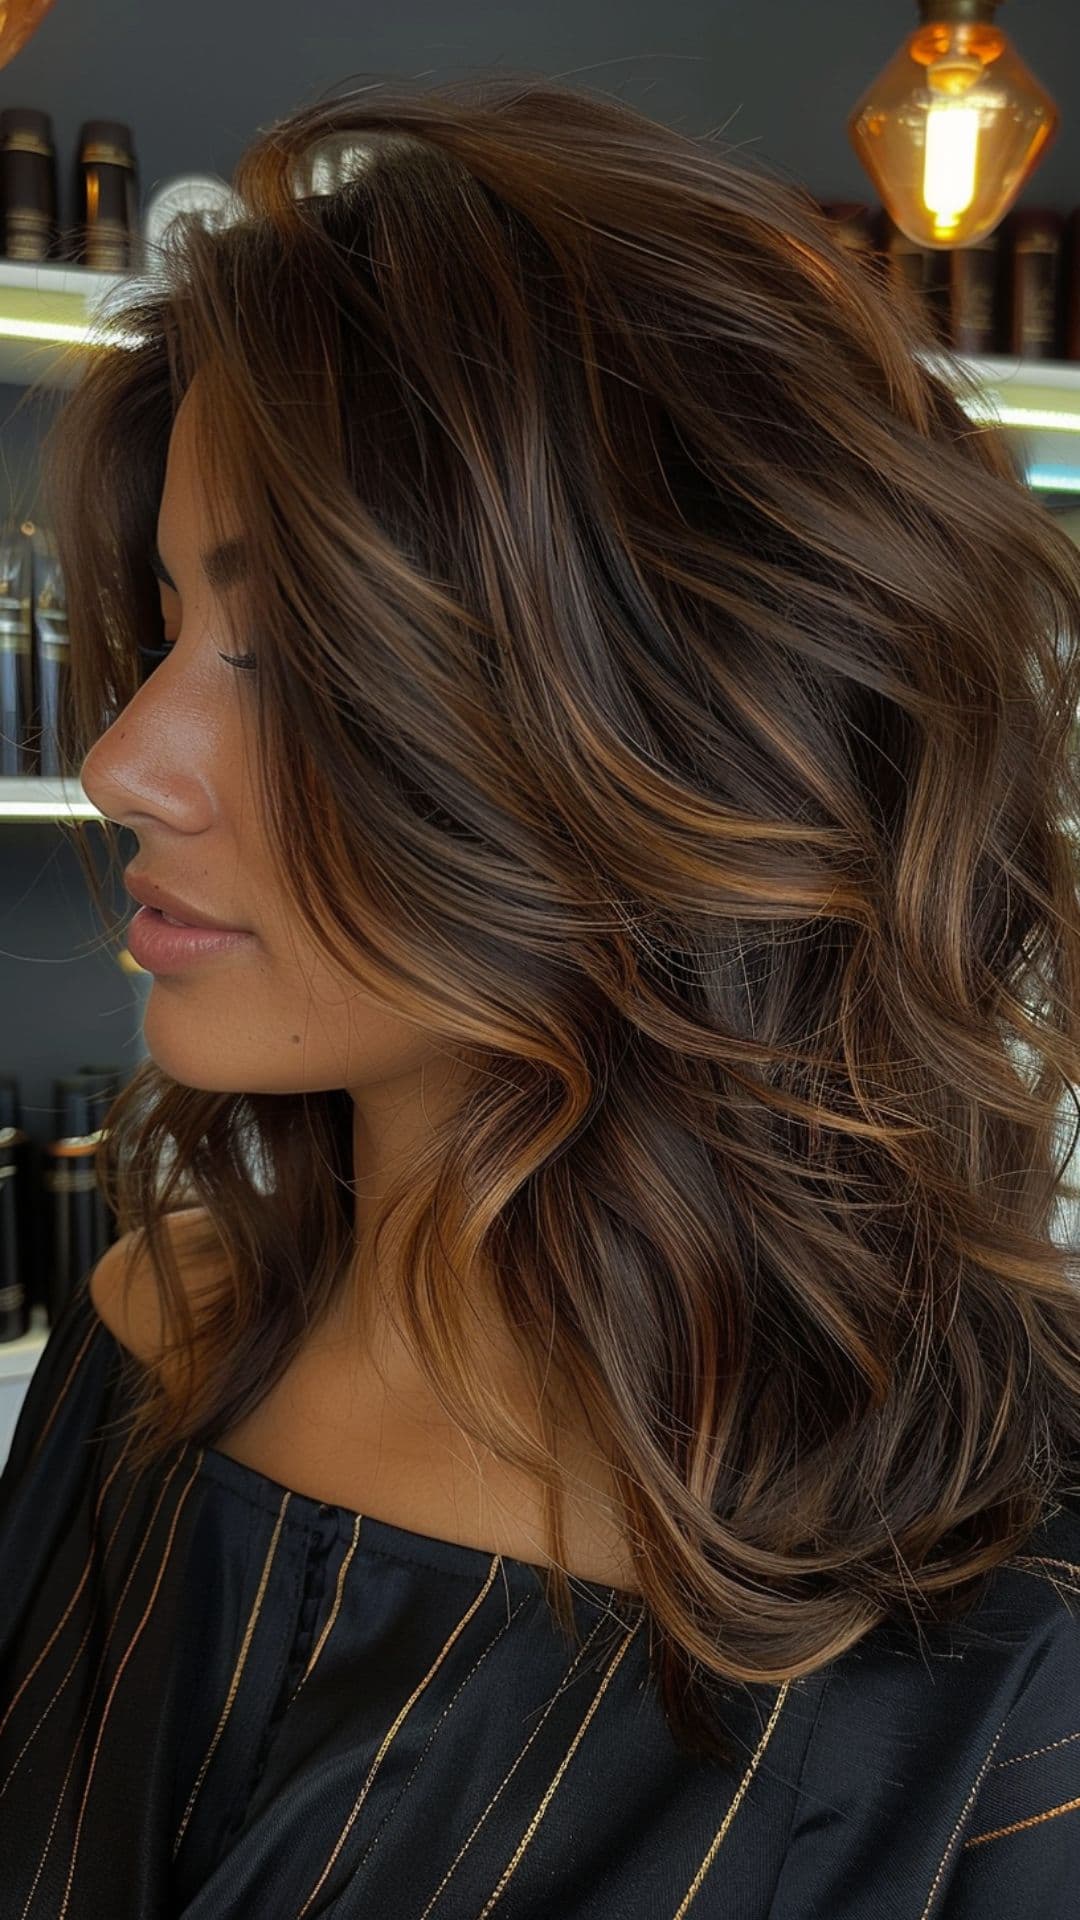 A woman modelling a caramel hair highlights.